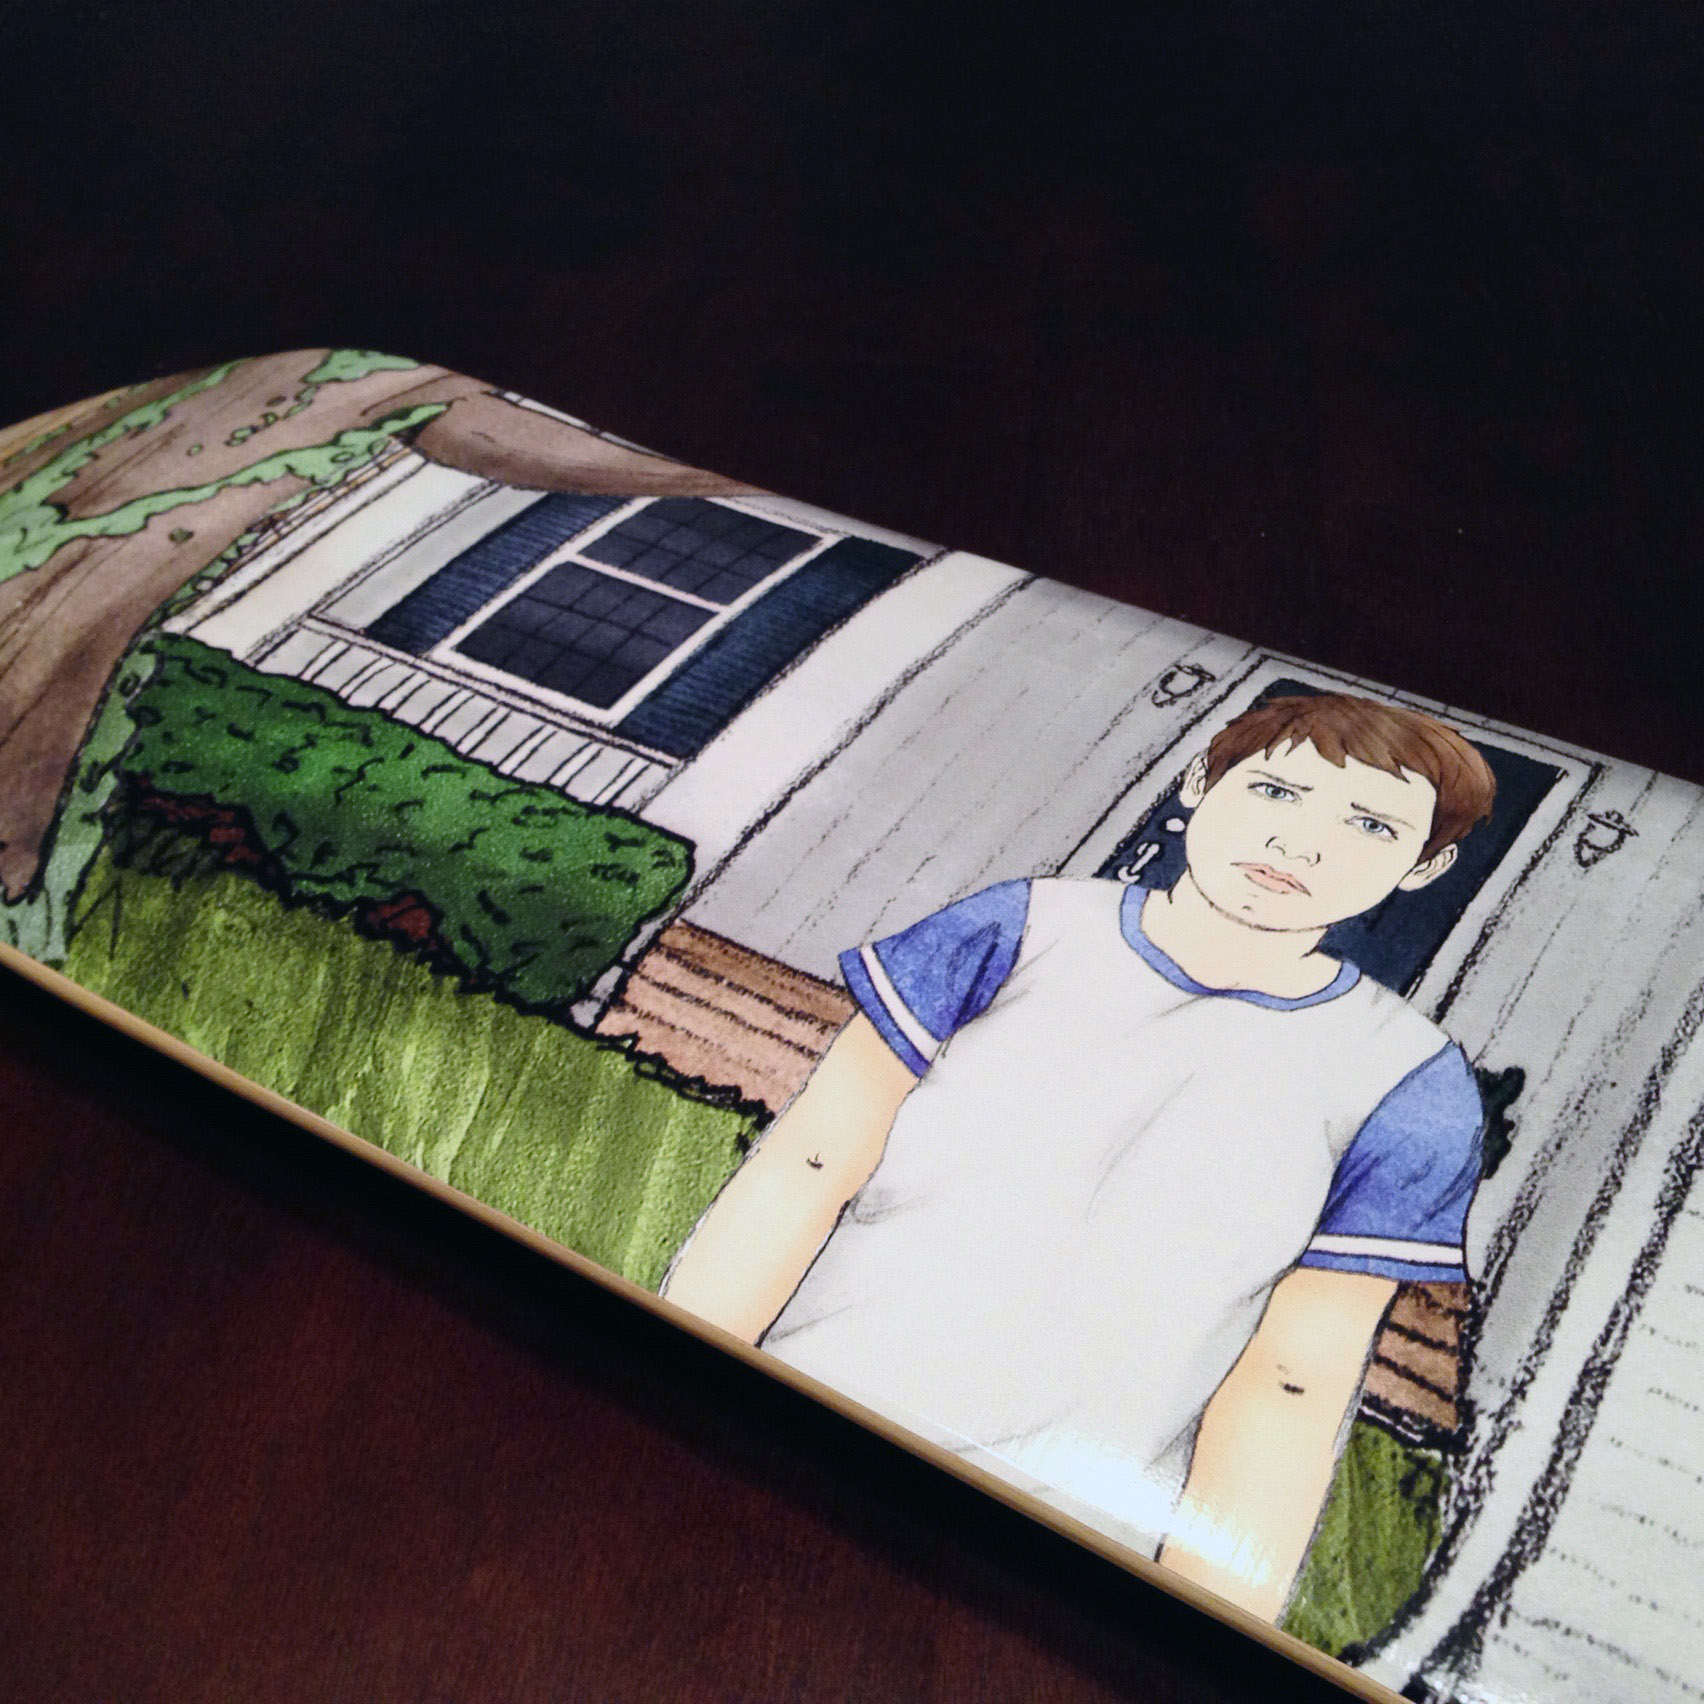 Illustration of boy on skateboard graphic